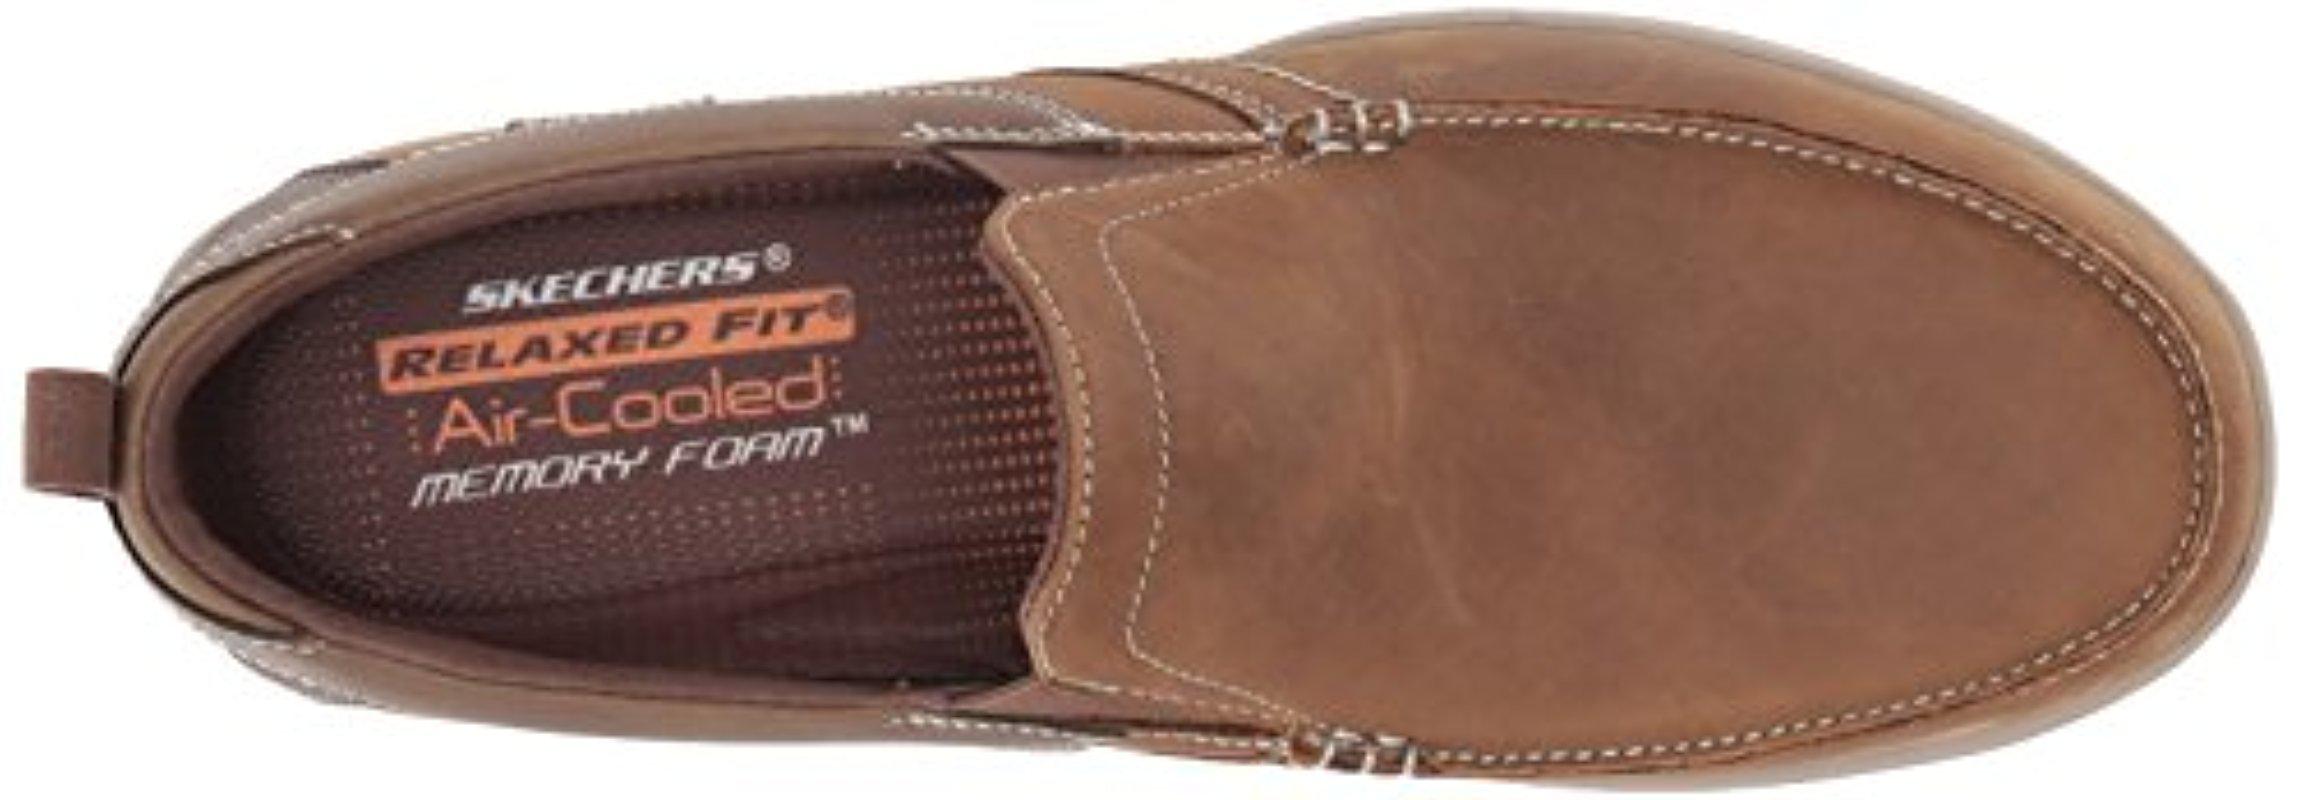 Skechers Leather Harper-forde Driving Style Loafer, Dsch, 6.5 